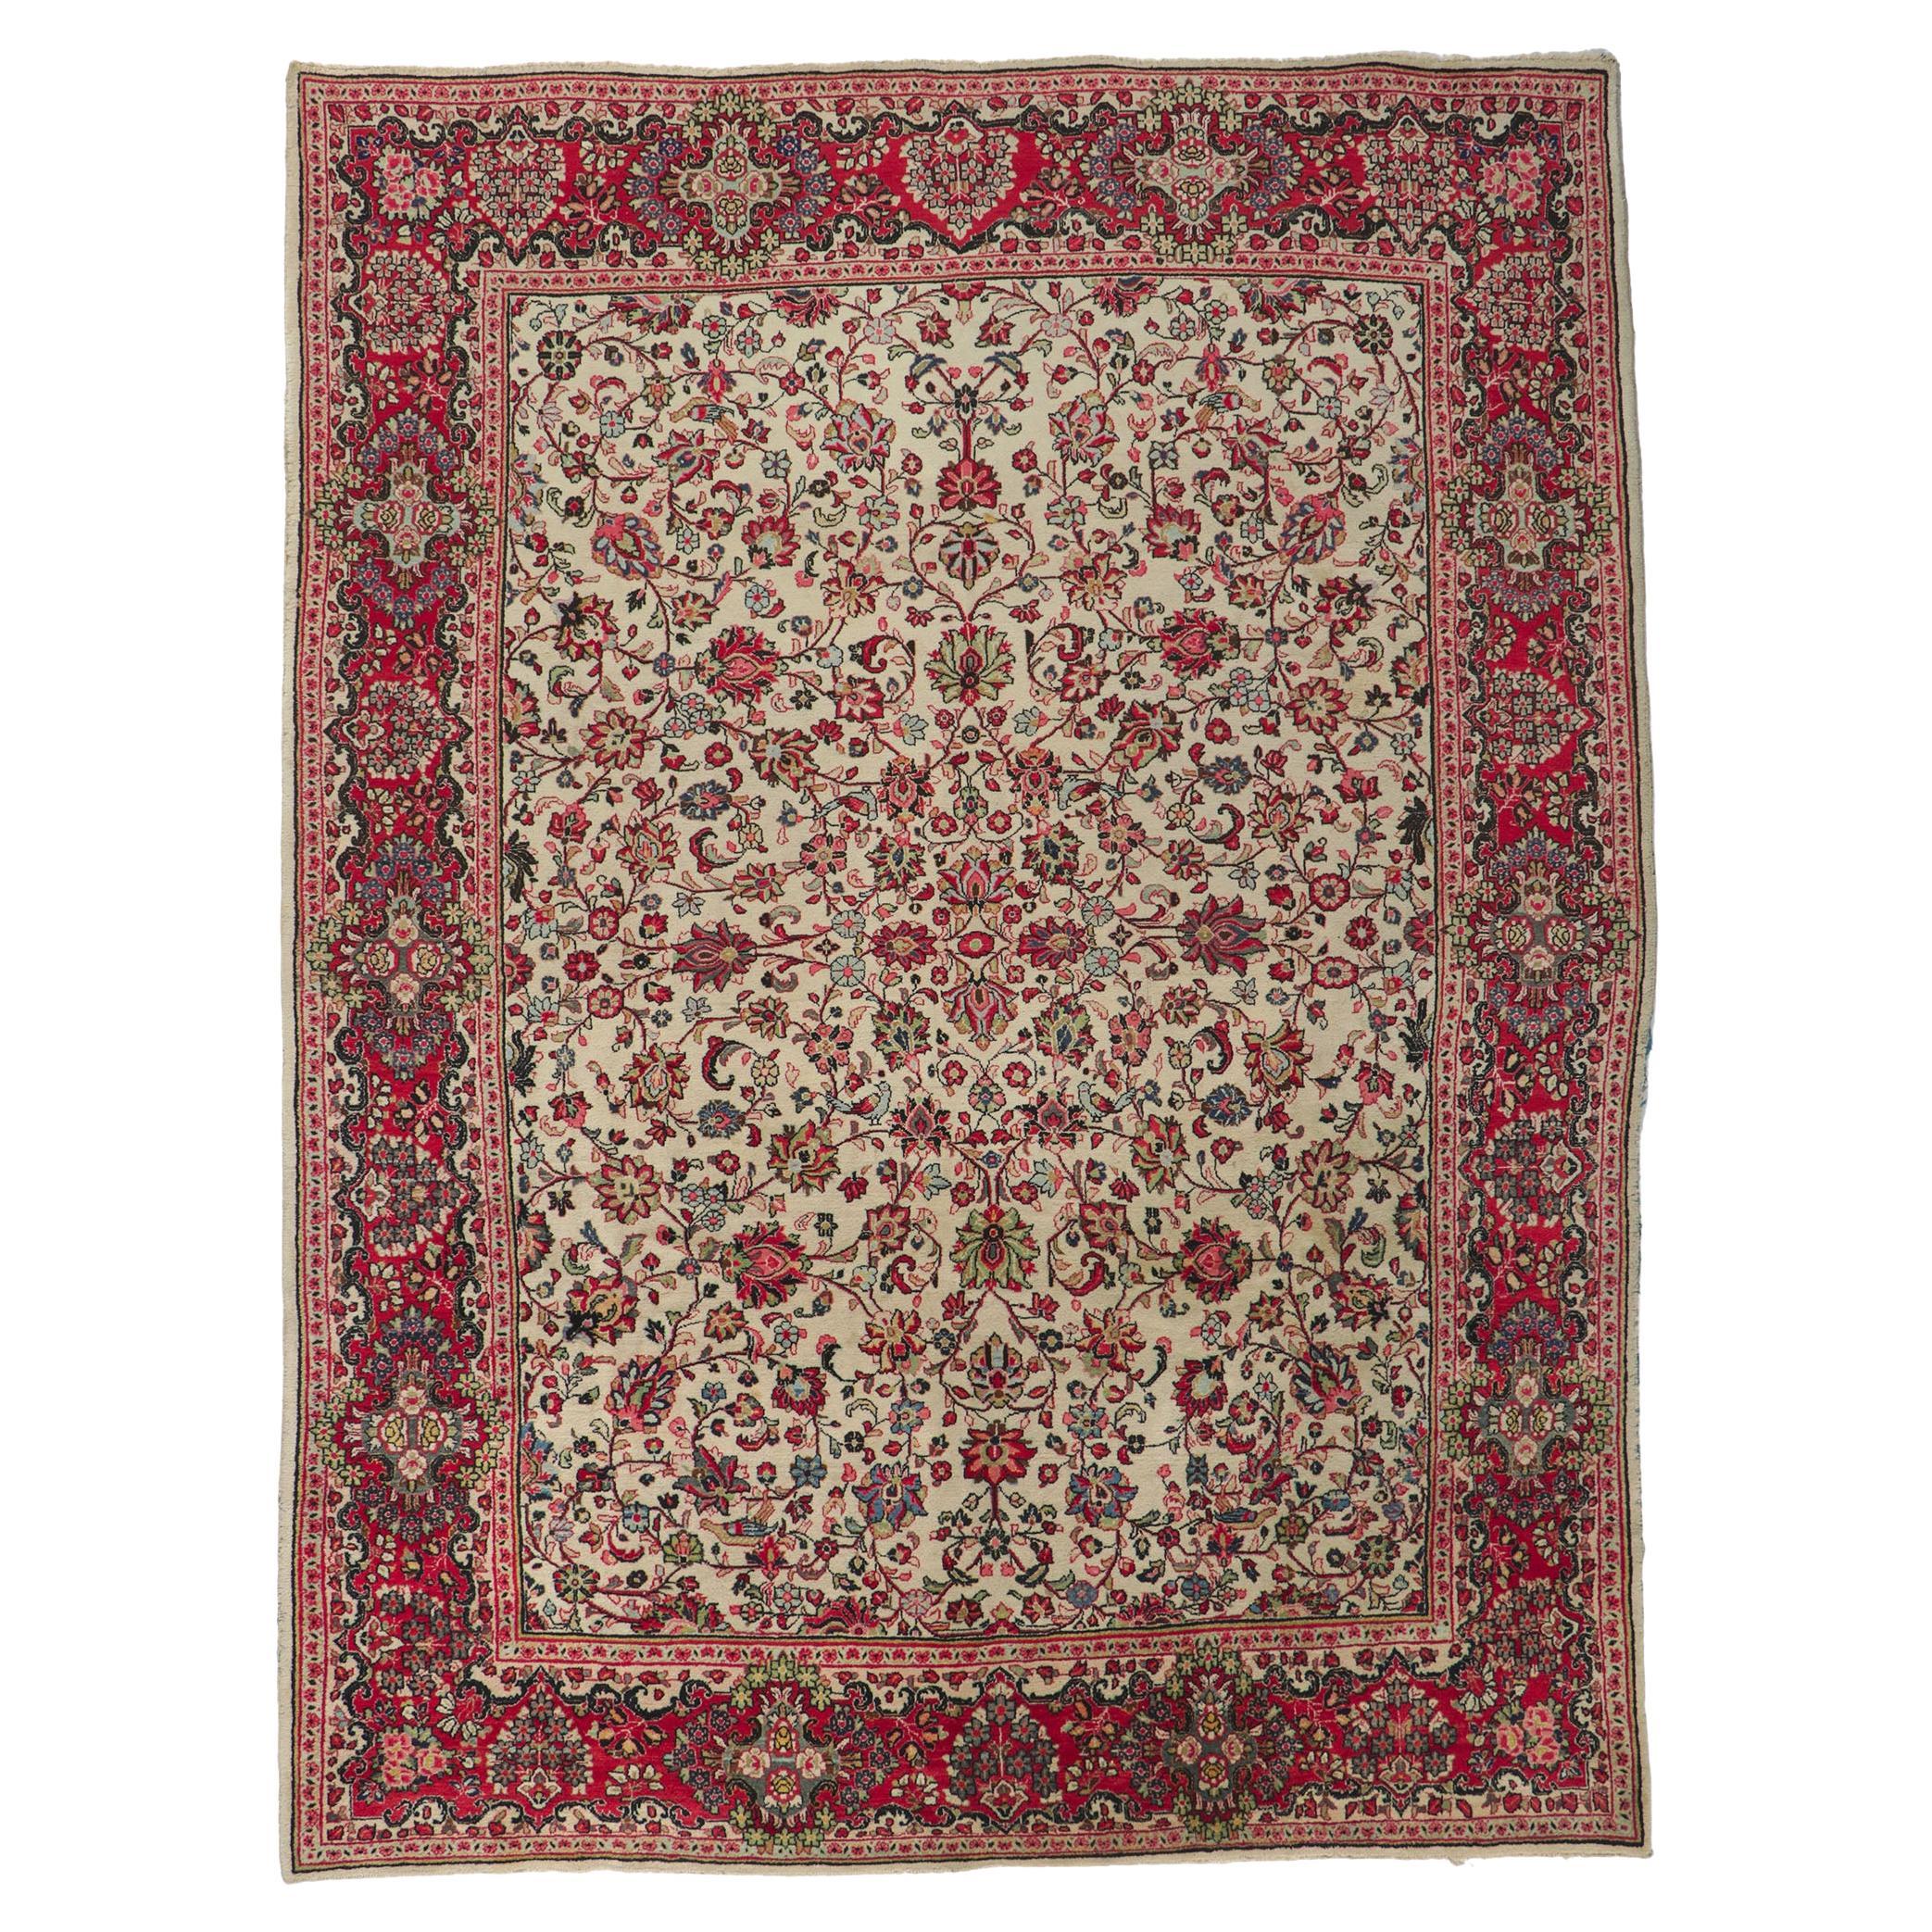 Vintage Persian Sarouk Rug